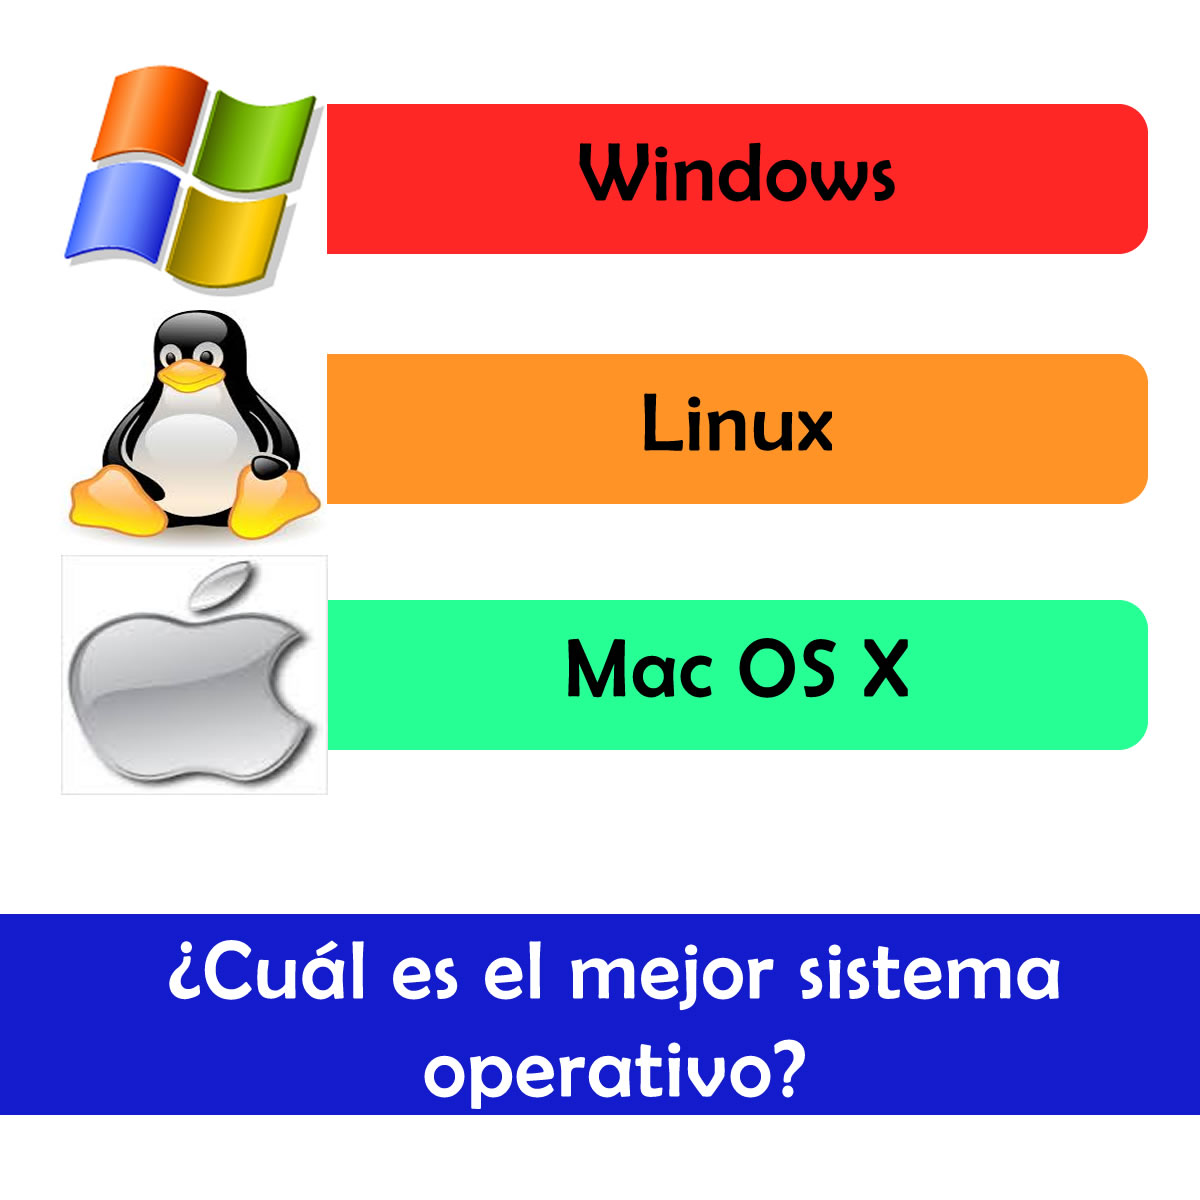 Windows Vs. Linux Vs. Mac OS X ¿Cuál es el mejor sistema